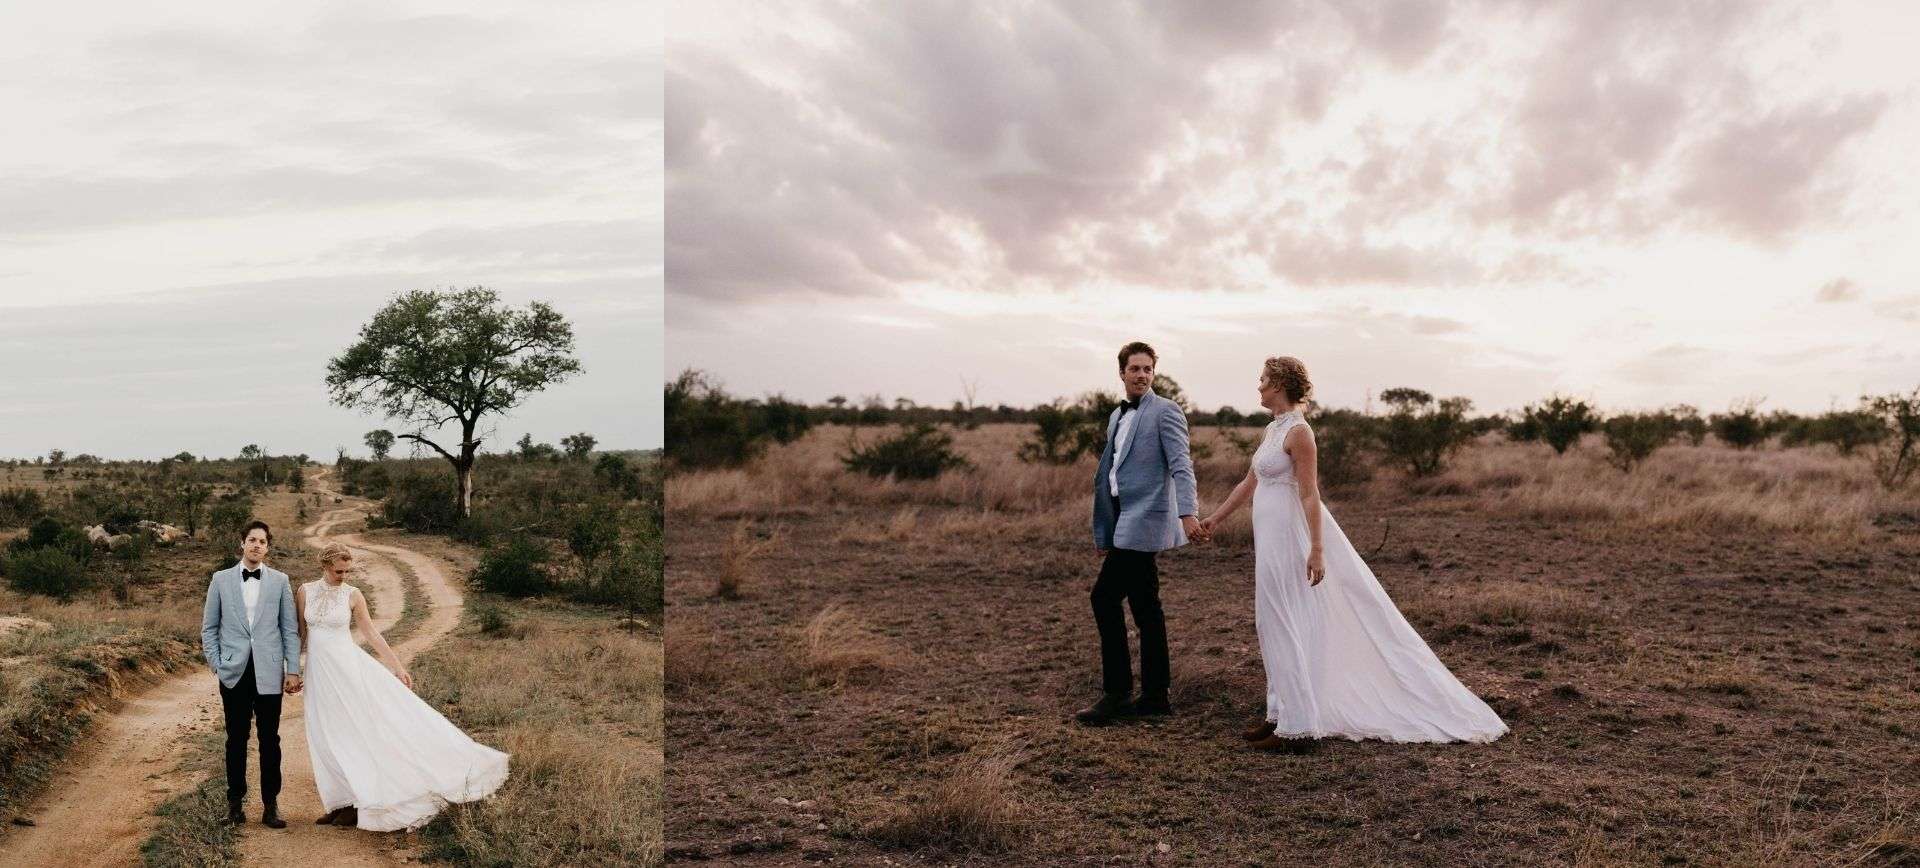 south africa safari elopement package - bride and groom at bush - elopement location south africa